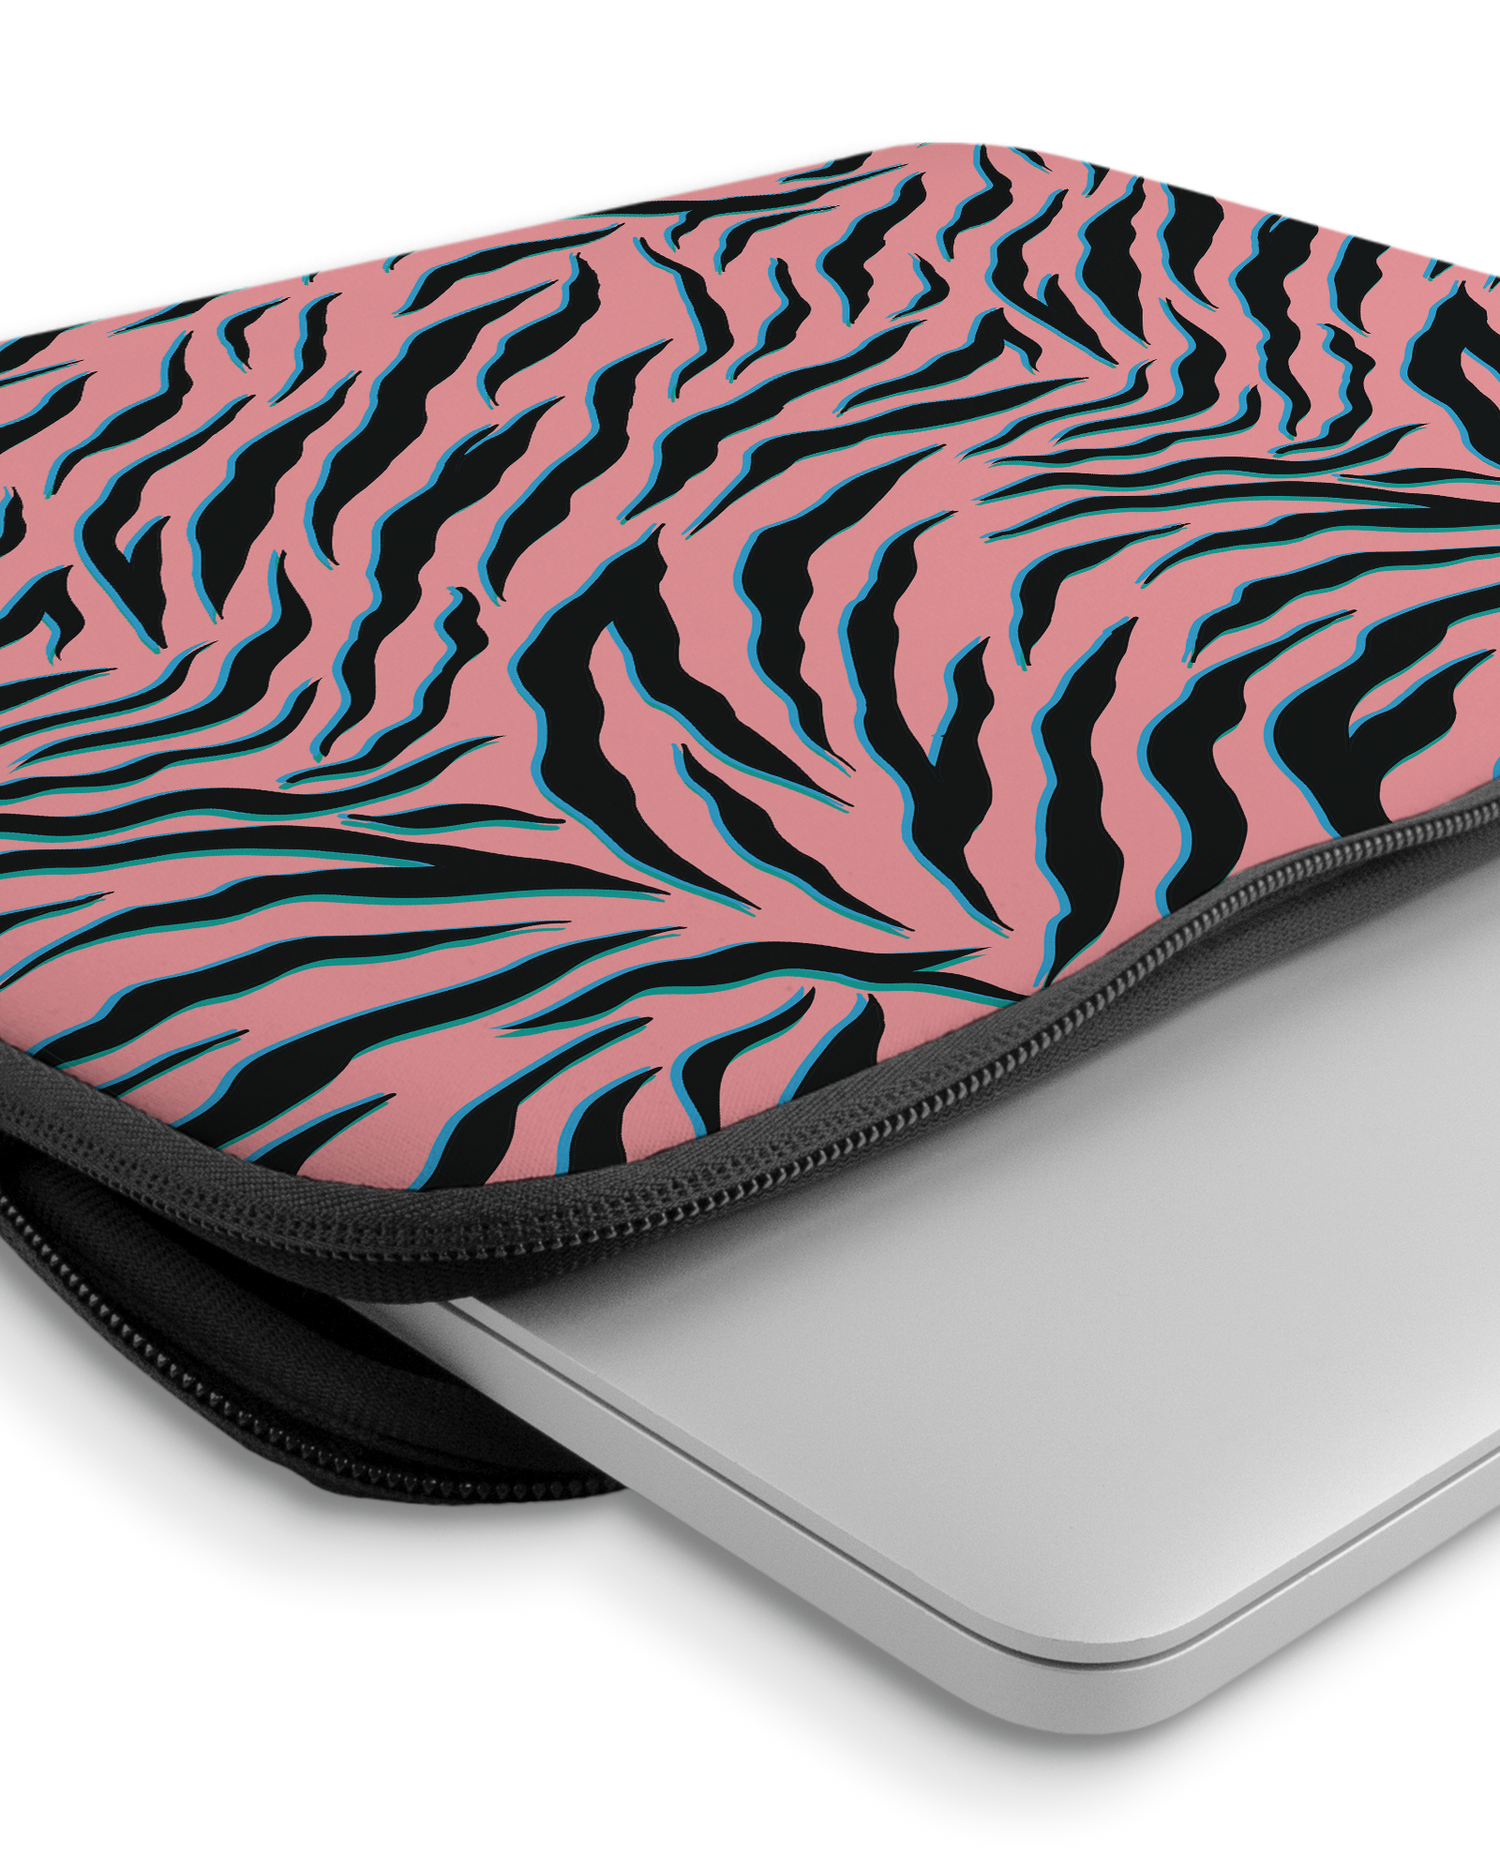 Pink Zebra Laptop Case 14-15 inch with device inside